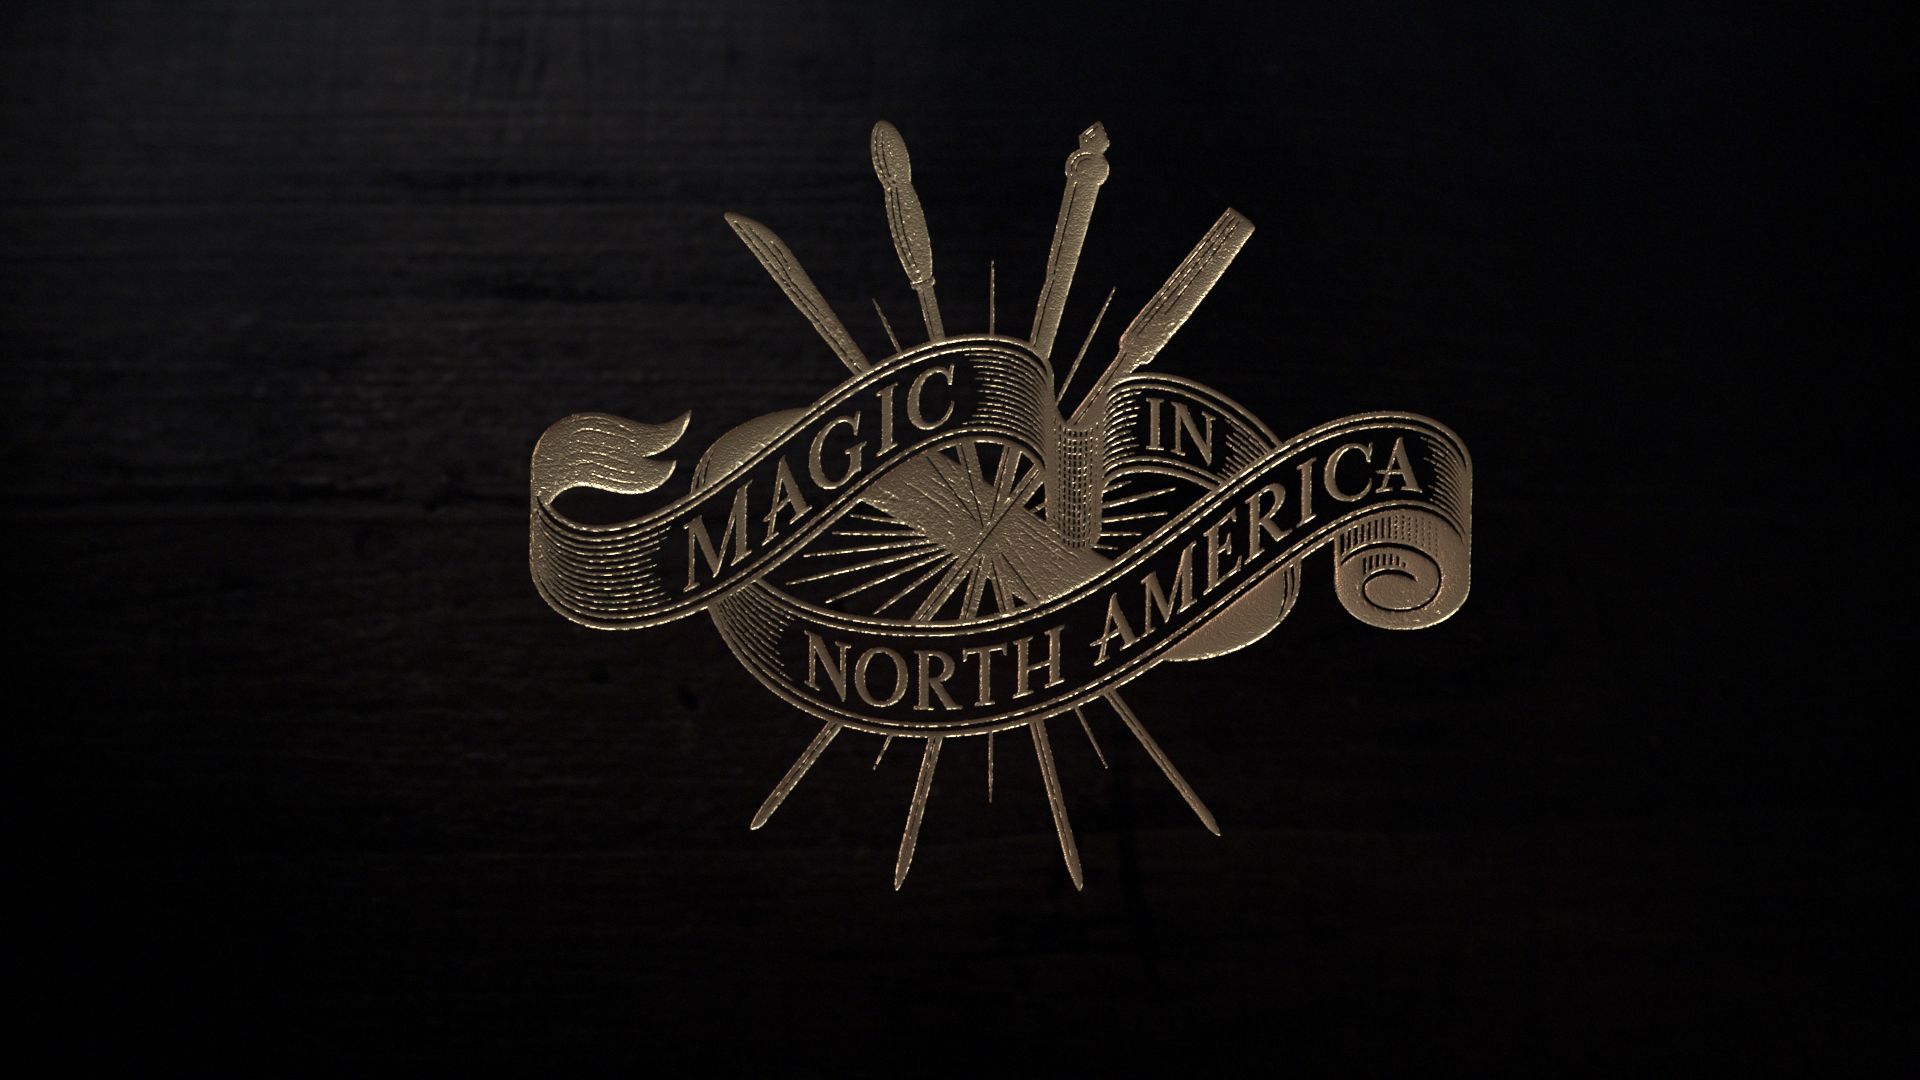 Pottermore reveals 'History of Magic in North America'